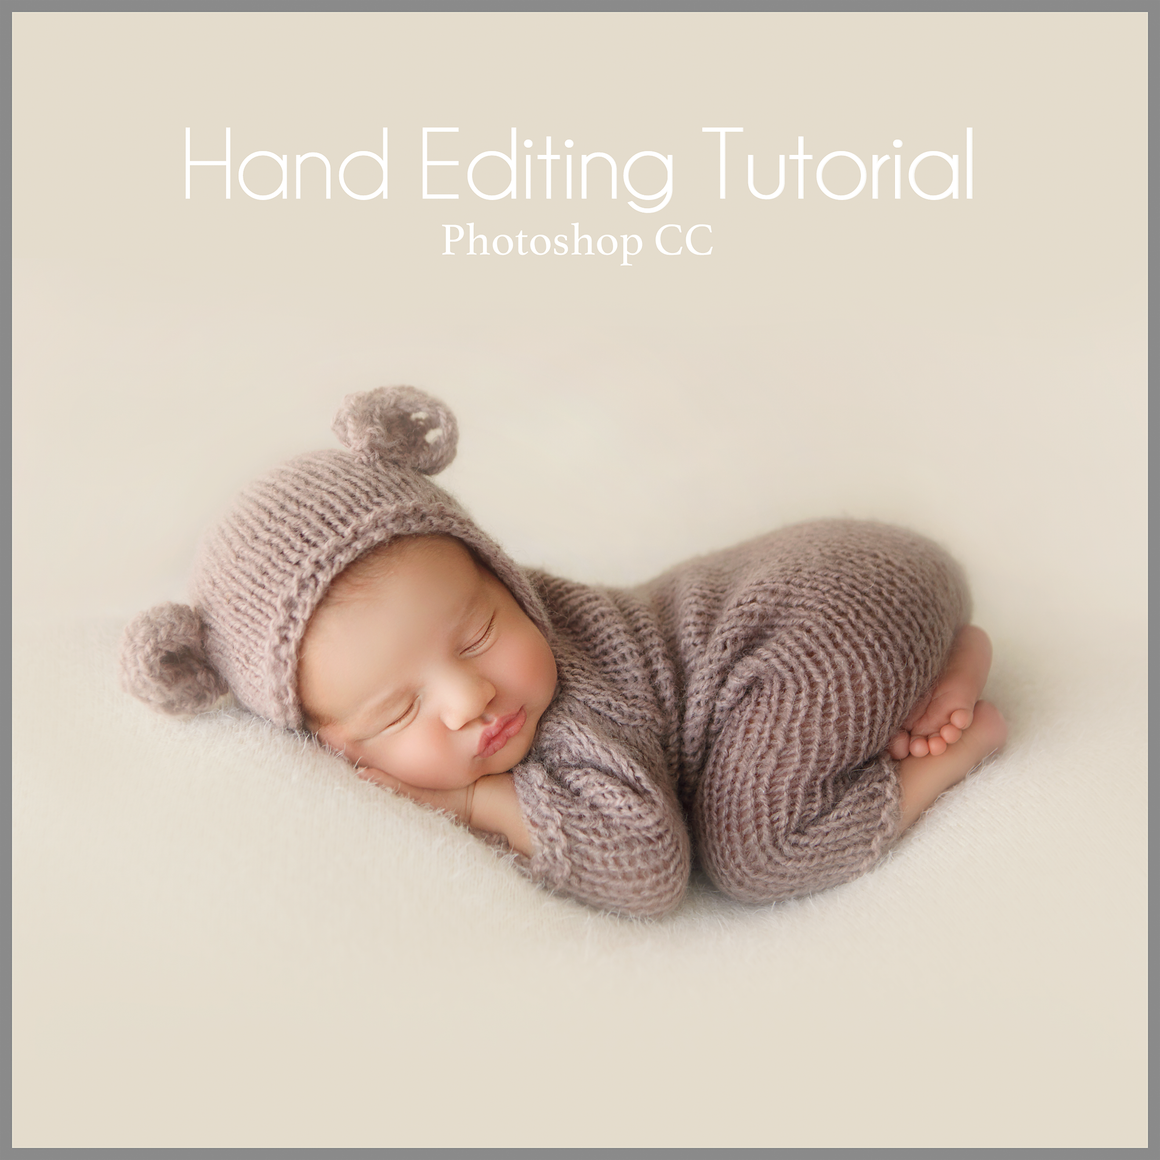 Teddy Bear in Light Vanilla Newborn Editing Tutorial | Photoshop Class - Dream Artsy Actions Tutorials